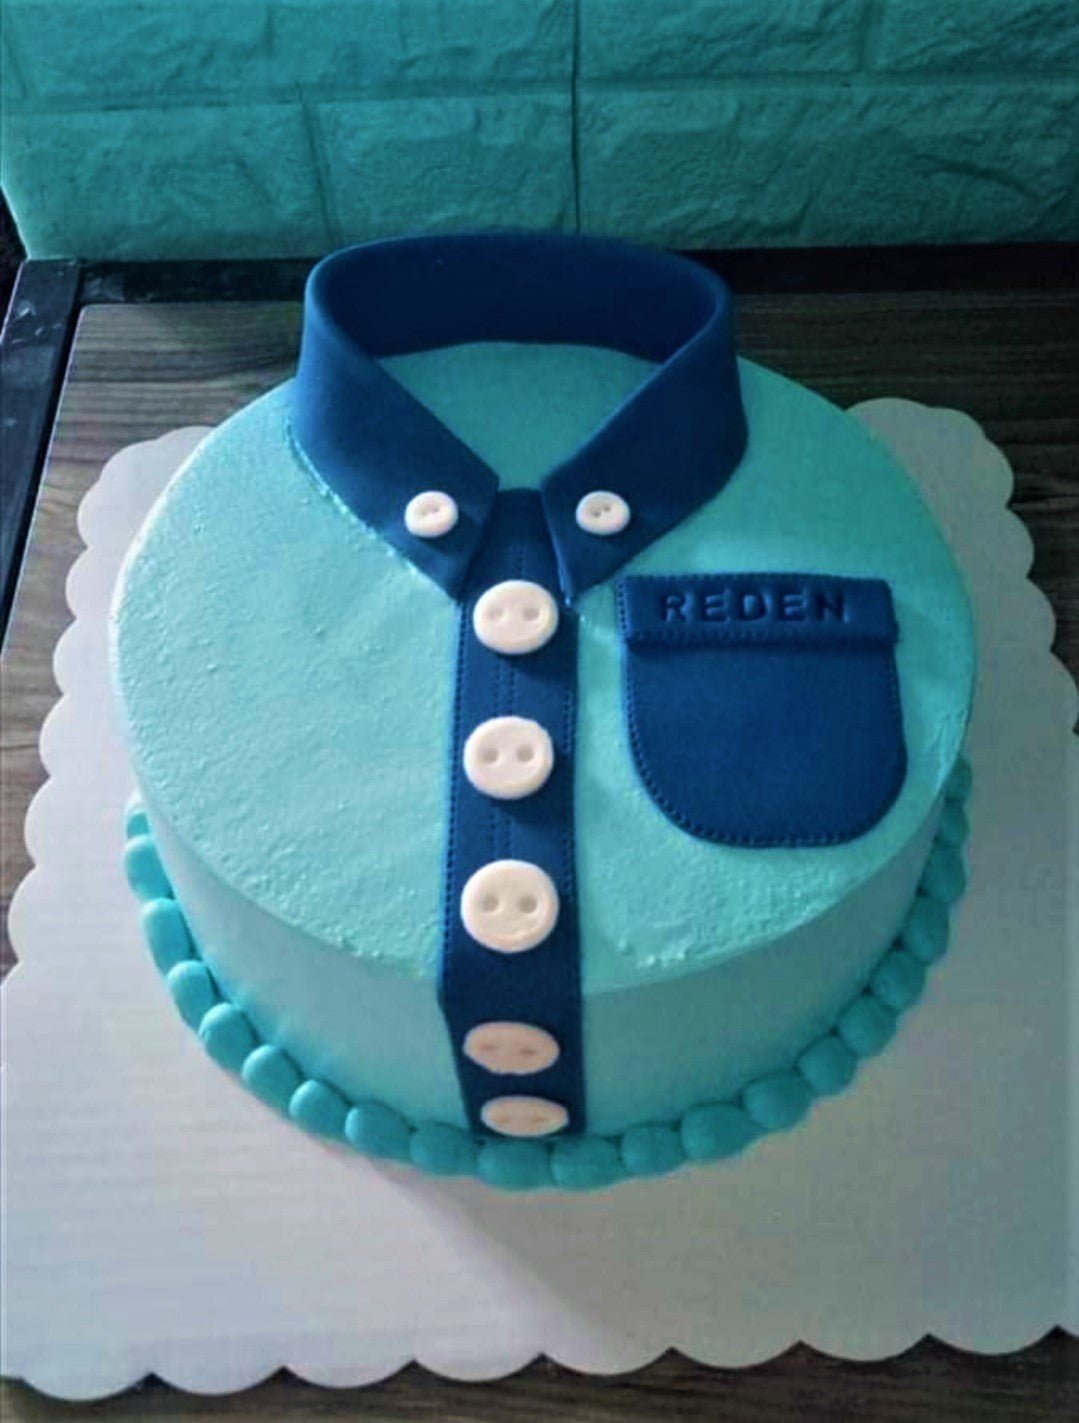 Polo Shirt Cake Tutorial! I Men's Birthday Cake Design I Father's Day -  YouTube